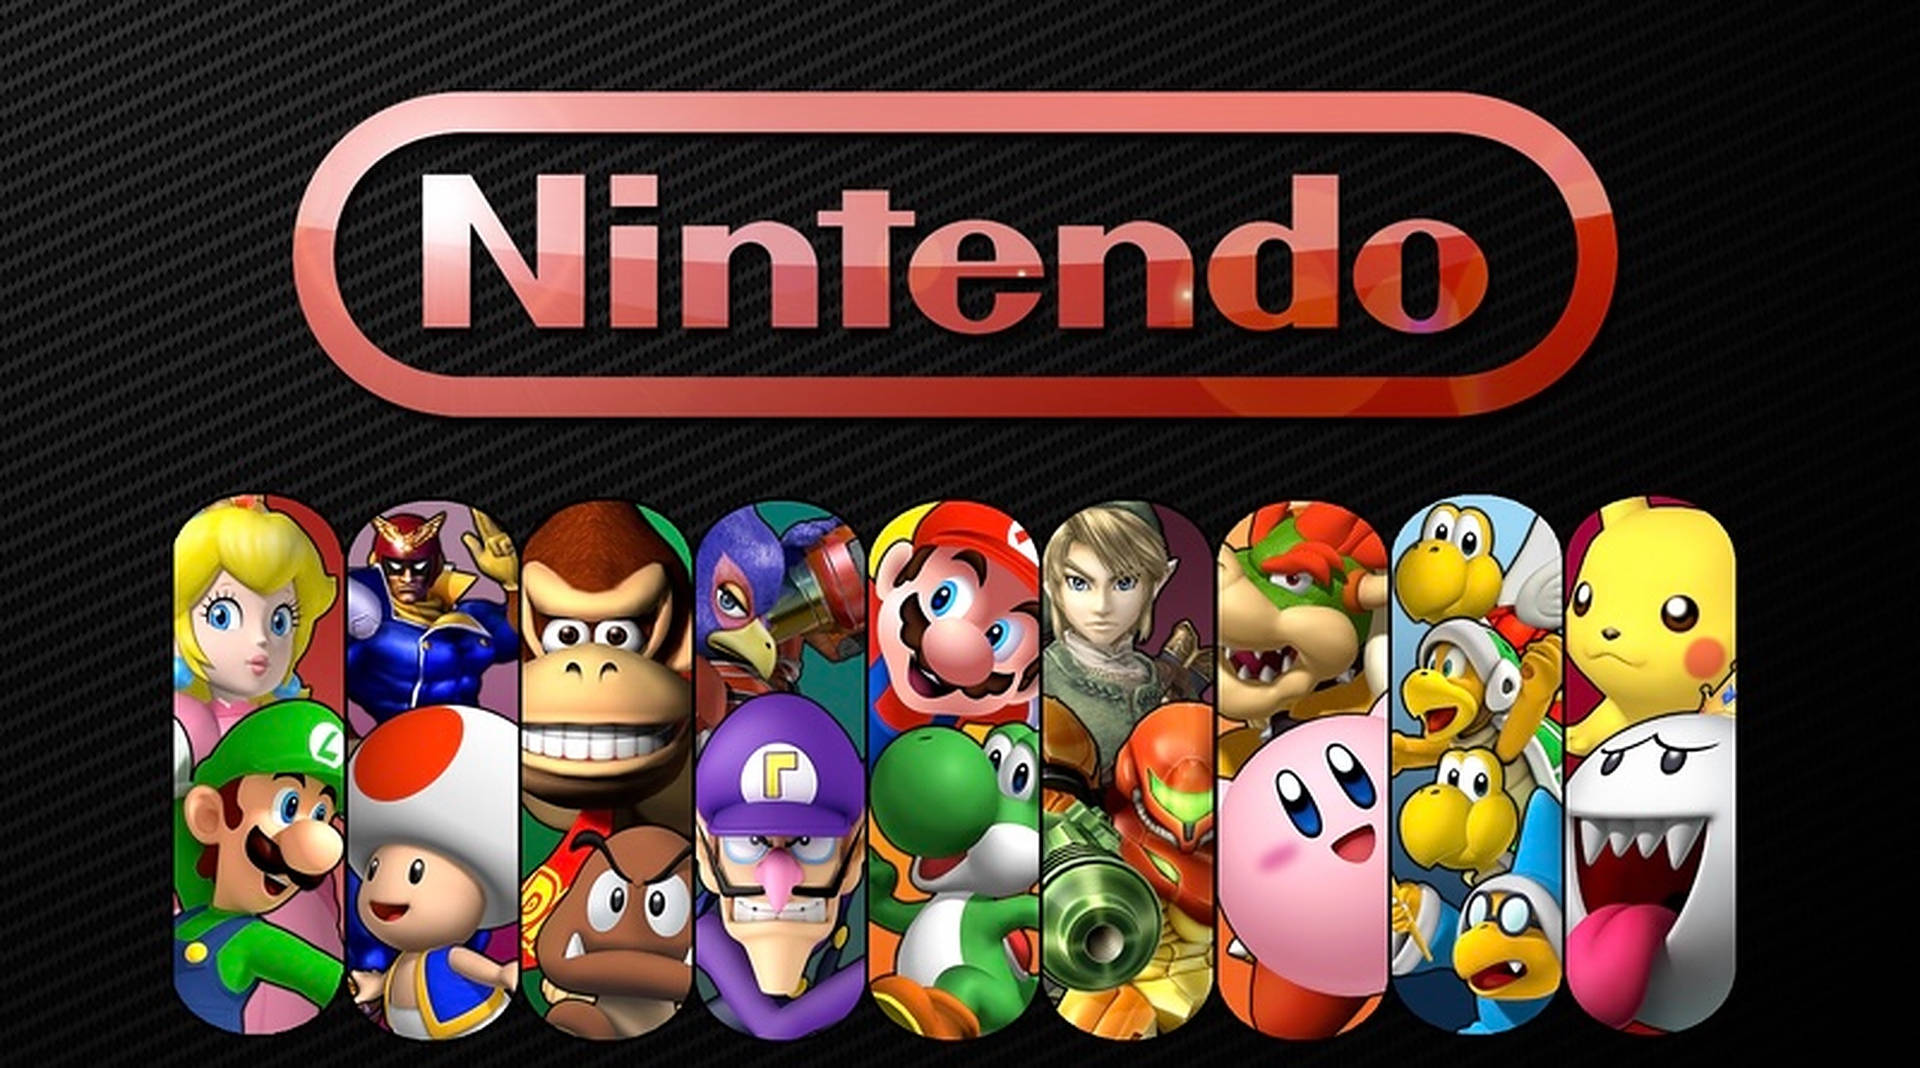 Nintendo Characters Logo Wallpaper